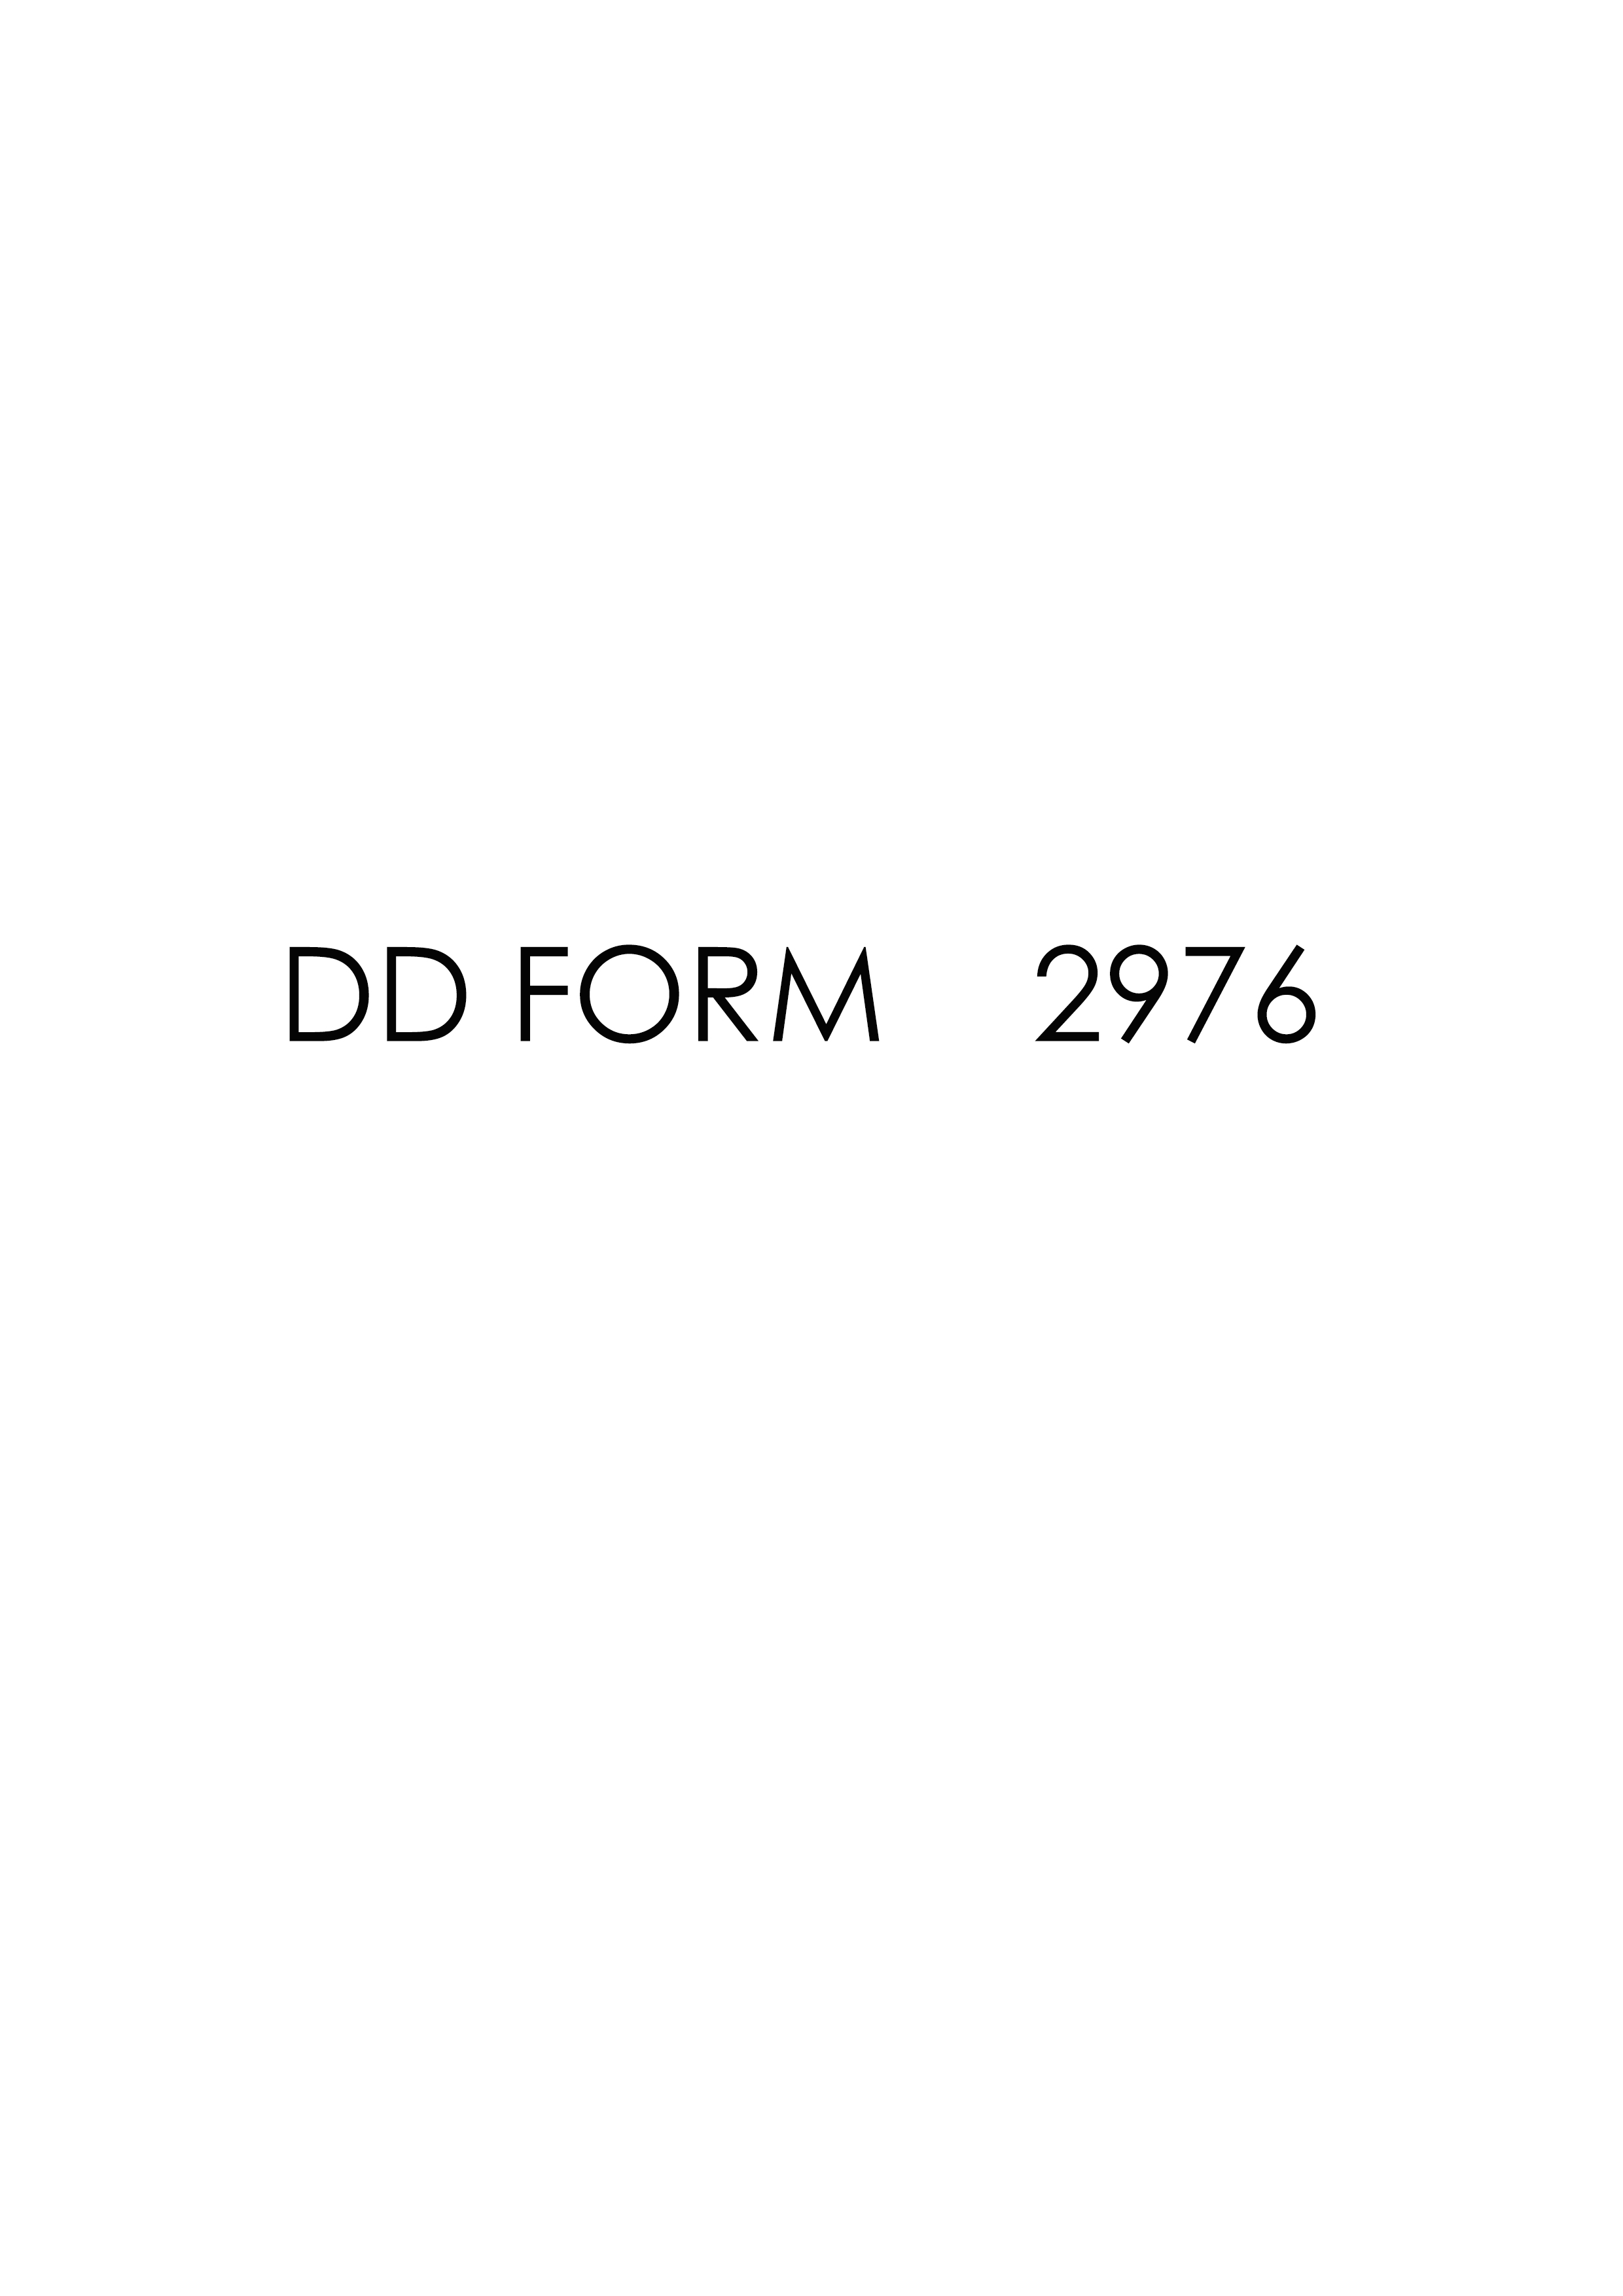 Download dd form 2976